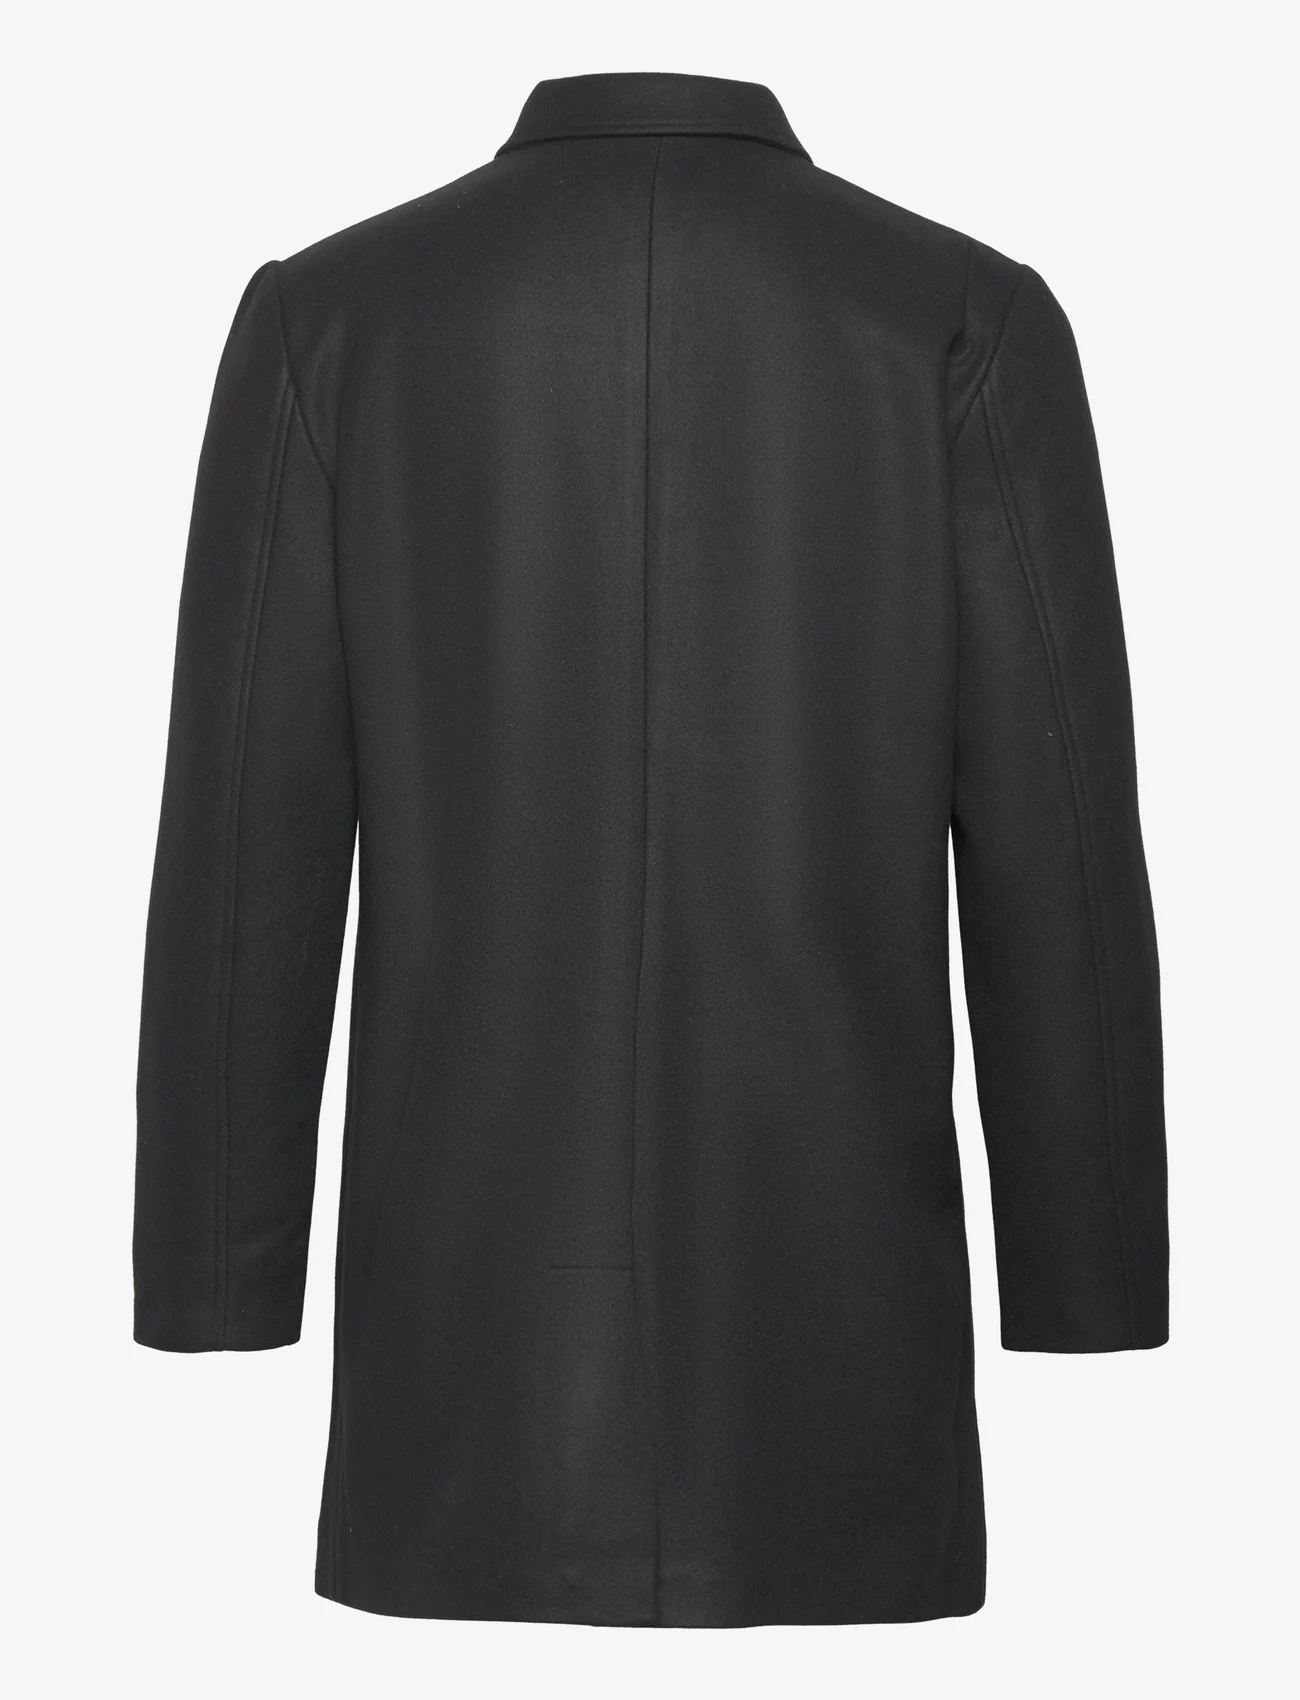 ONLY & SONS - ONSADAM COAT OTW VD - winter jackets - black - 1